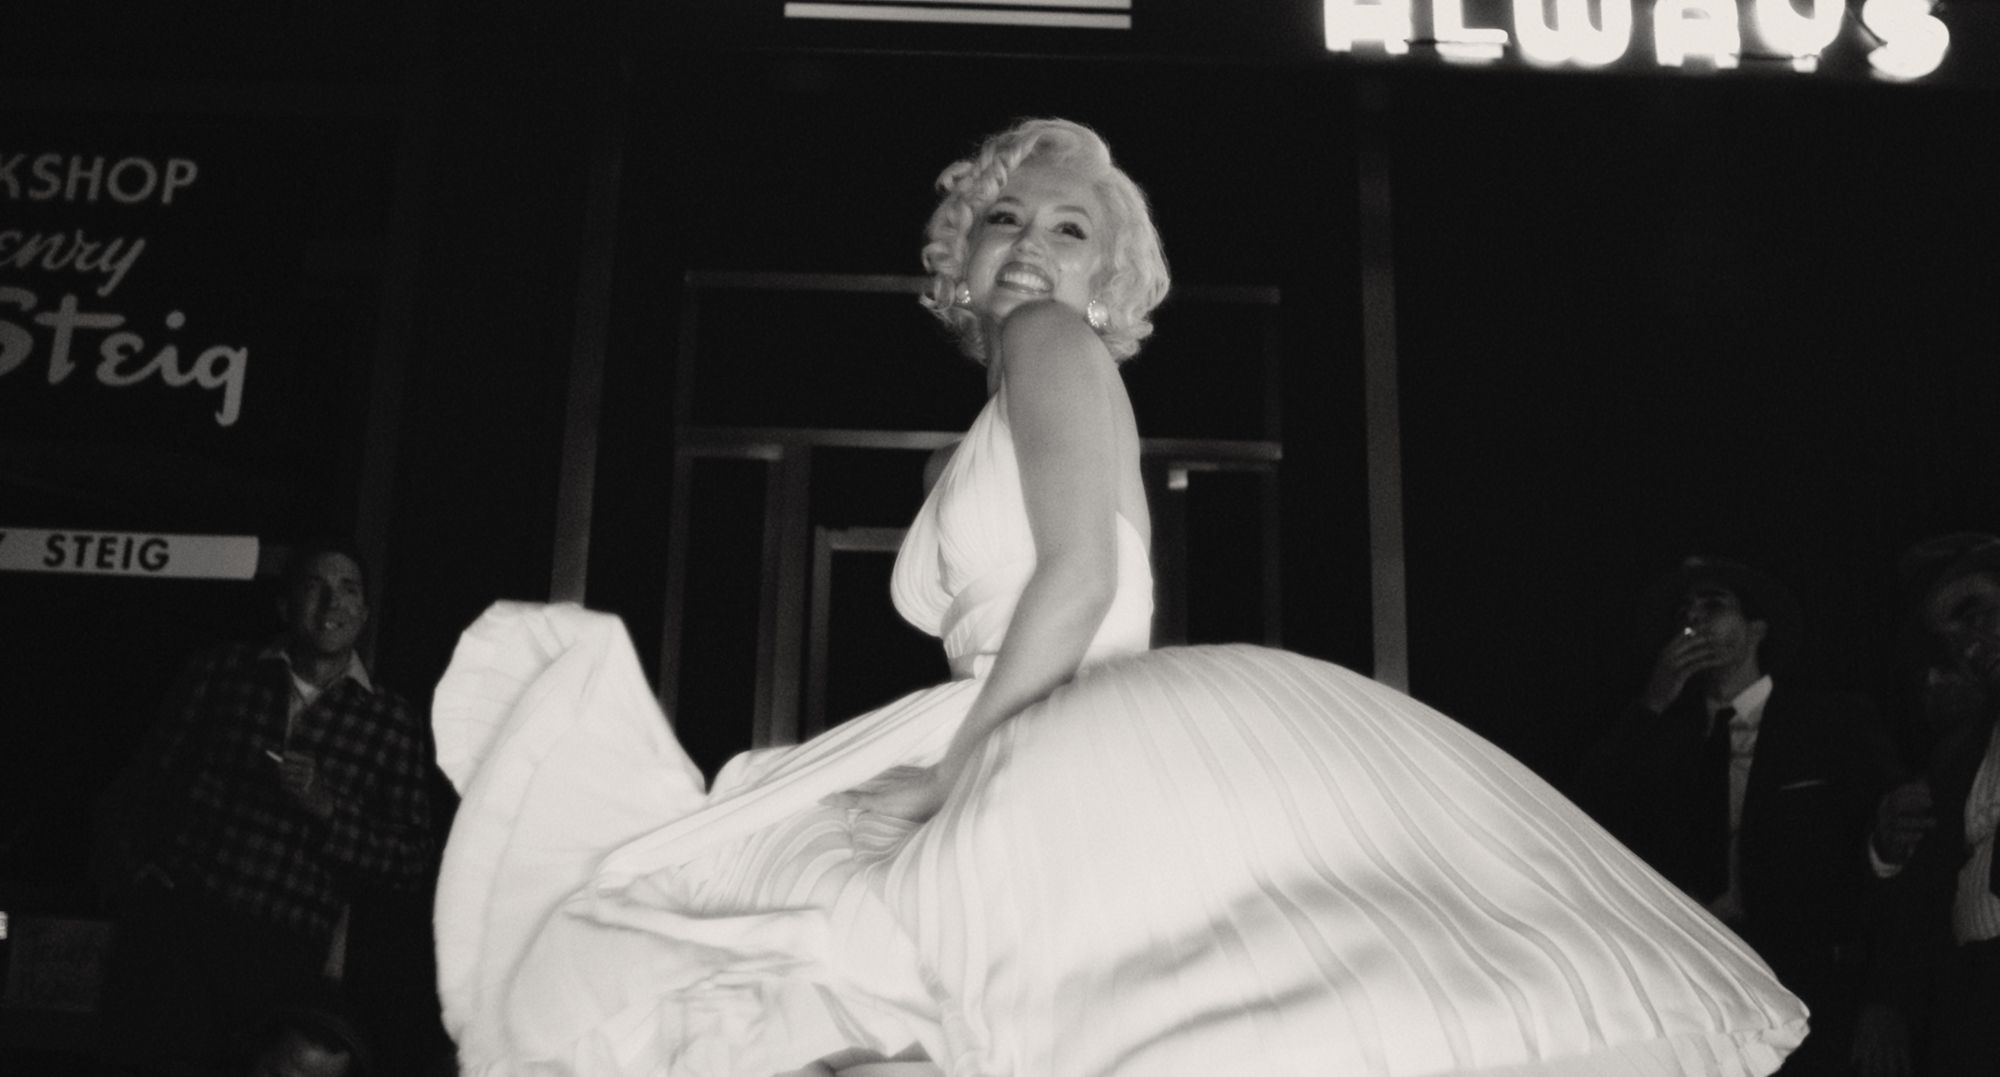 Blonde, recensione: la povera Marilyn Monroe non merita questo film